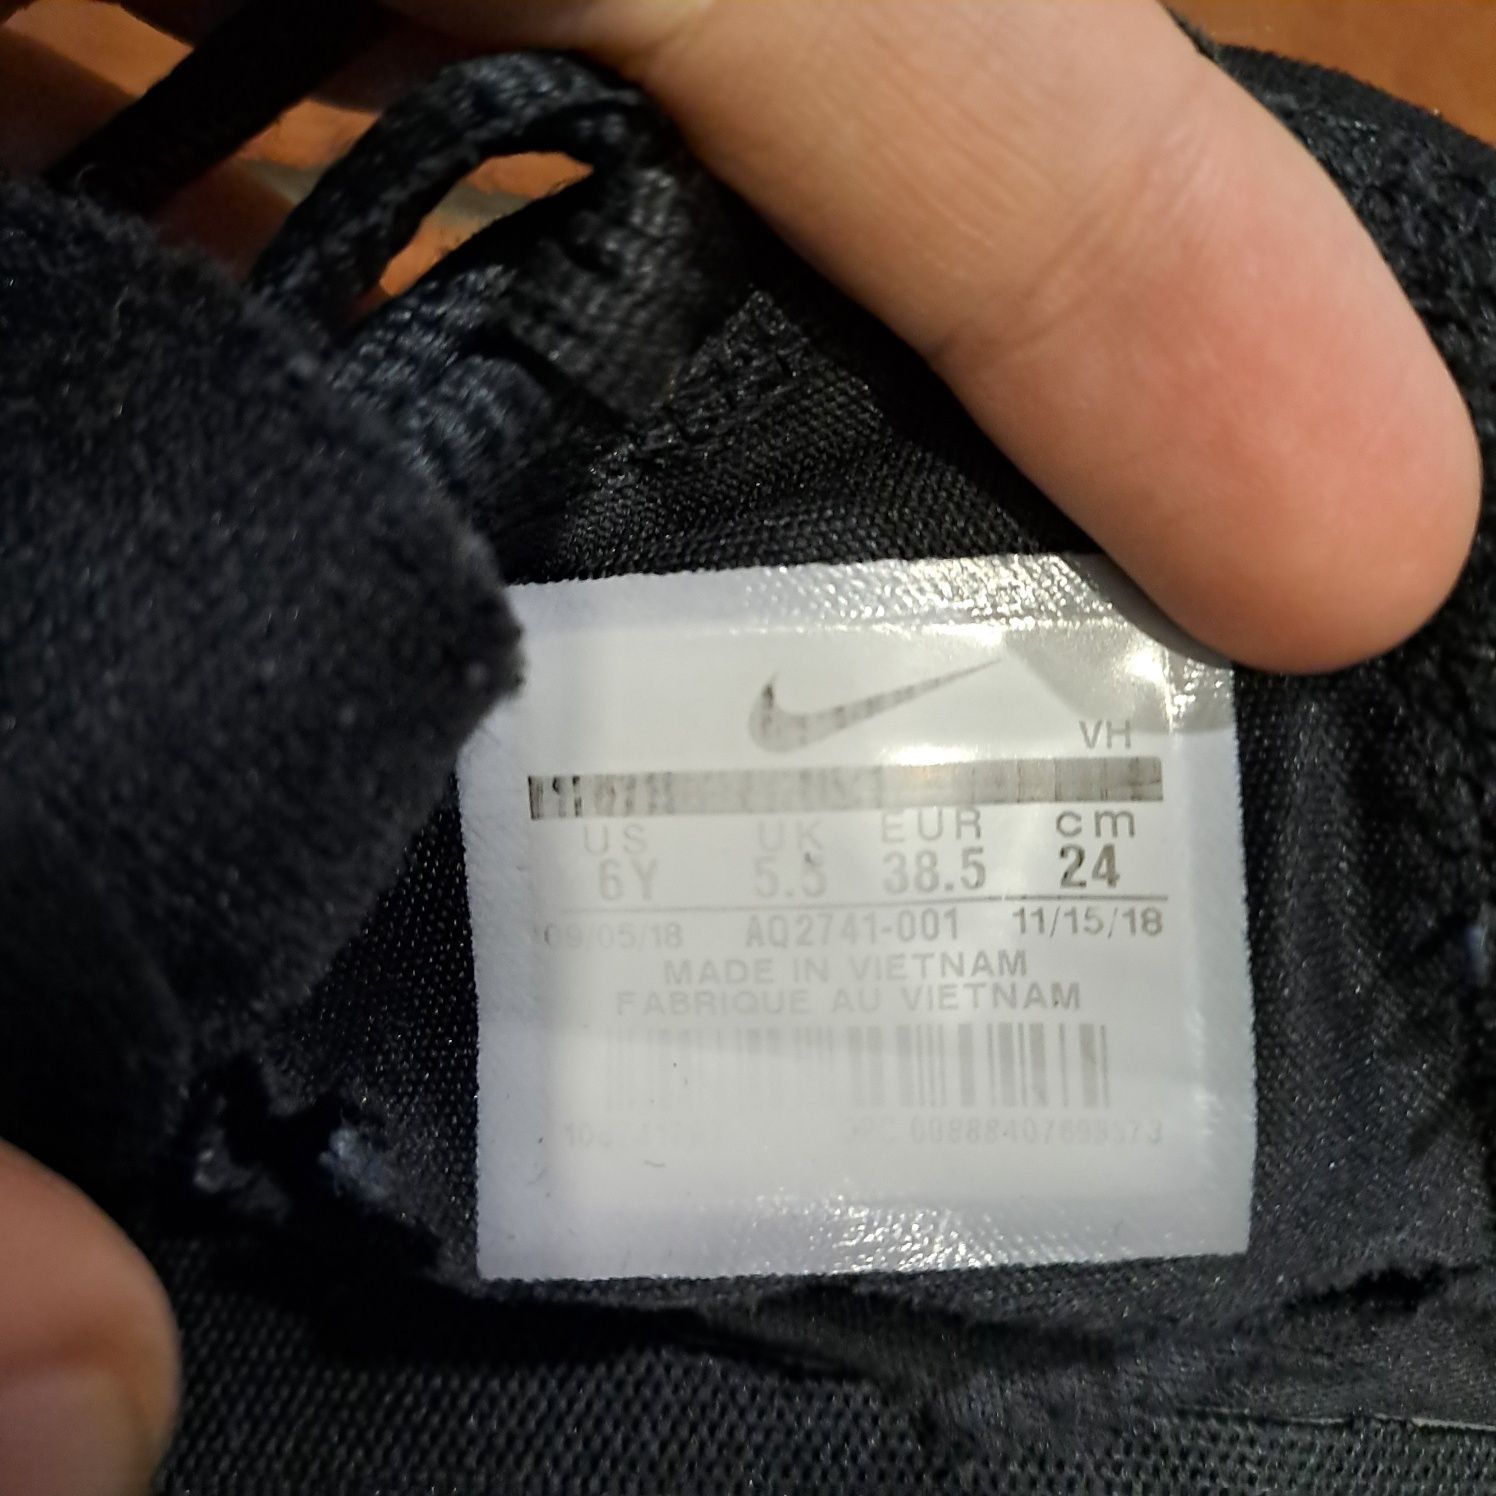 Buty Nike Air Max Motion 2 AQ2741 Black/White w rozmiarze 38.5